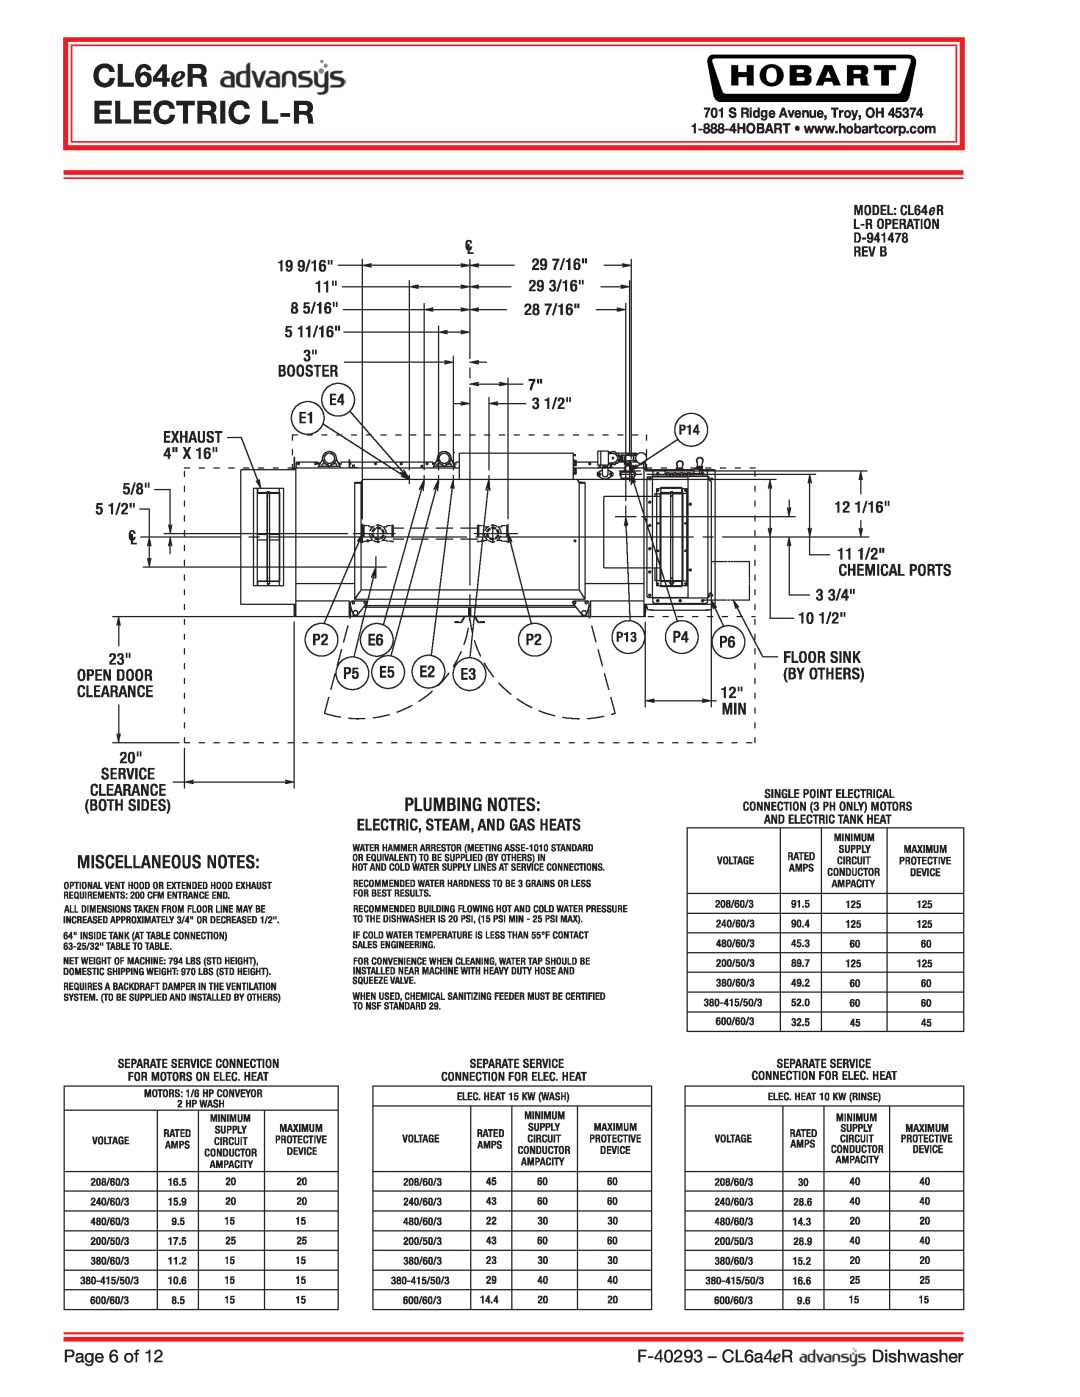 Hobart CL64ER dimensions CL64eR ELECTRIC L-R, Page 6 of, F-40293 - CL6a4eR, Dishwasher, S Ridge Avenue, Troy, OH 